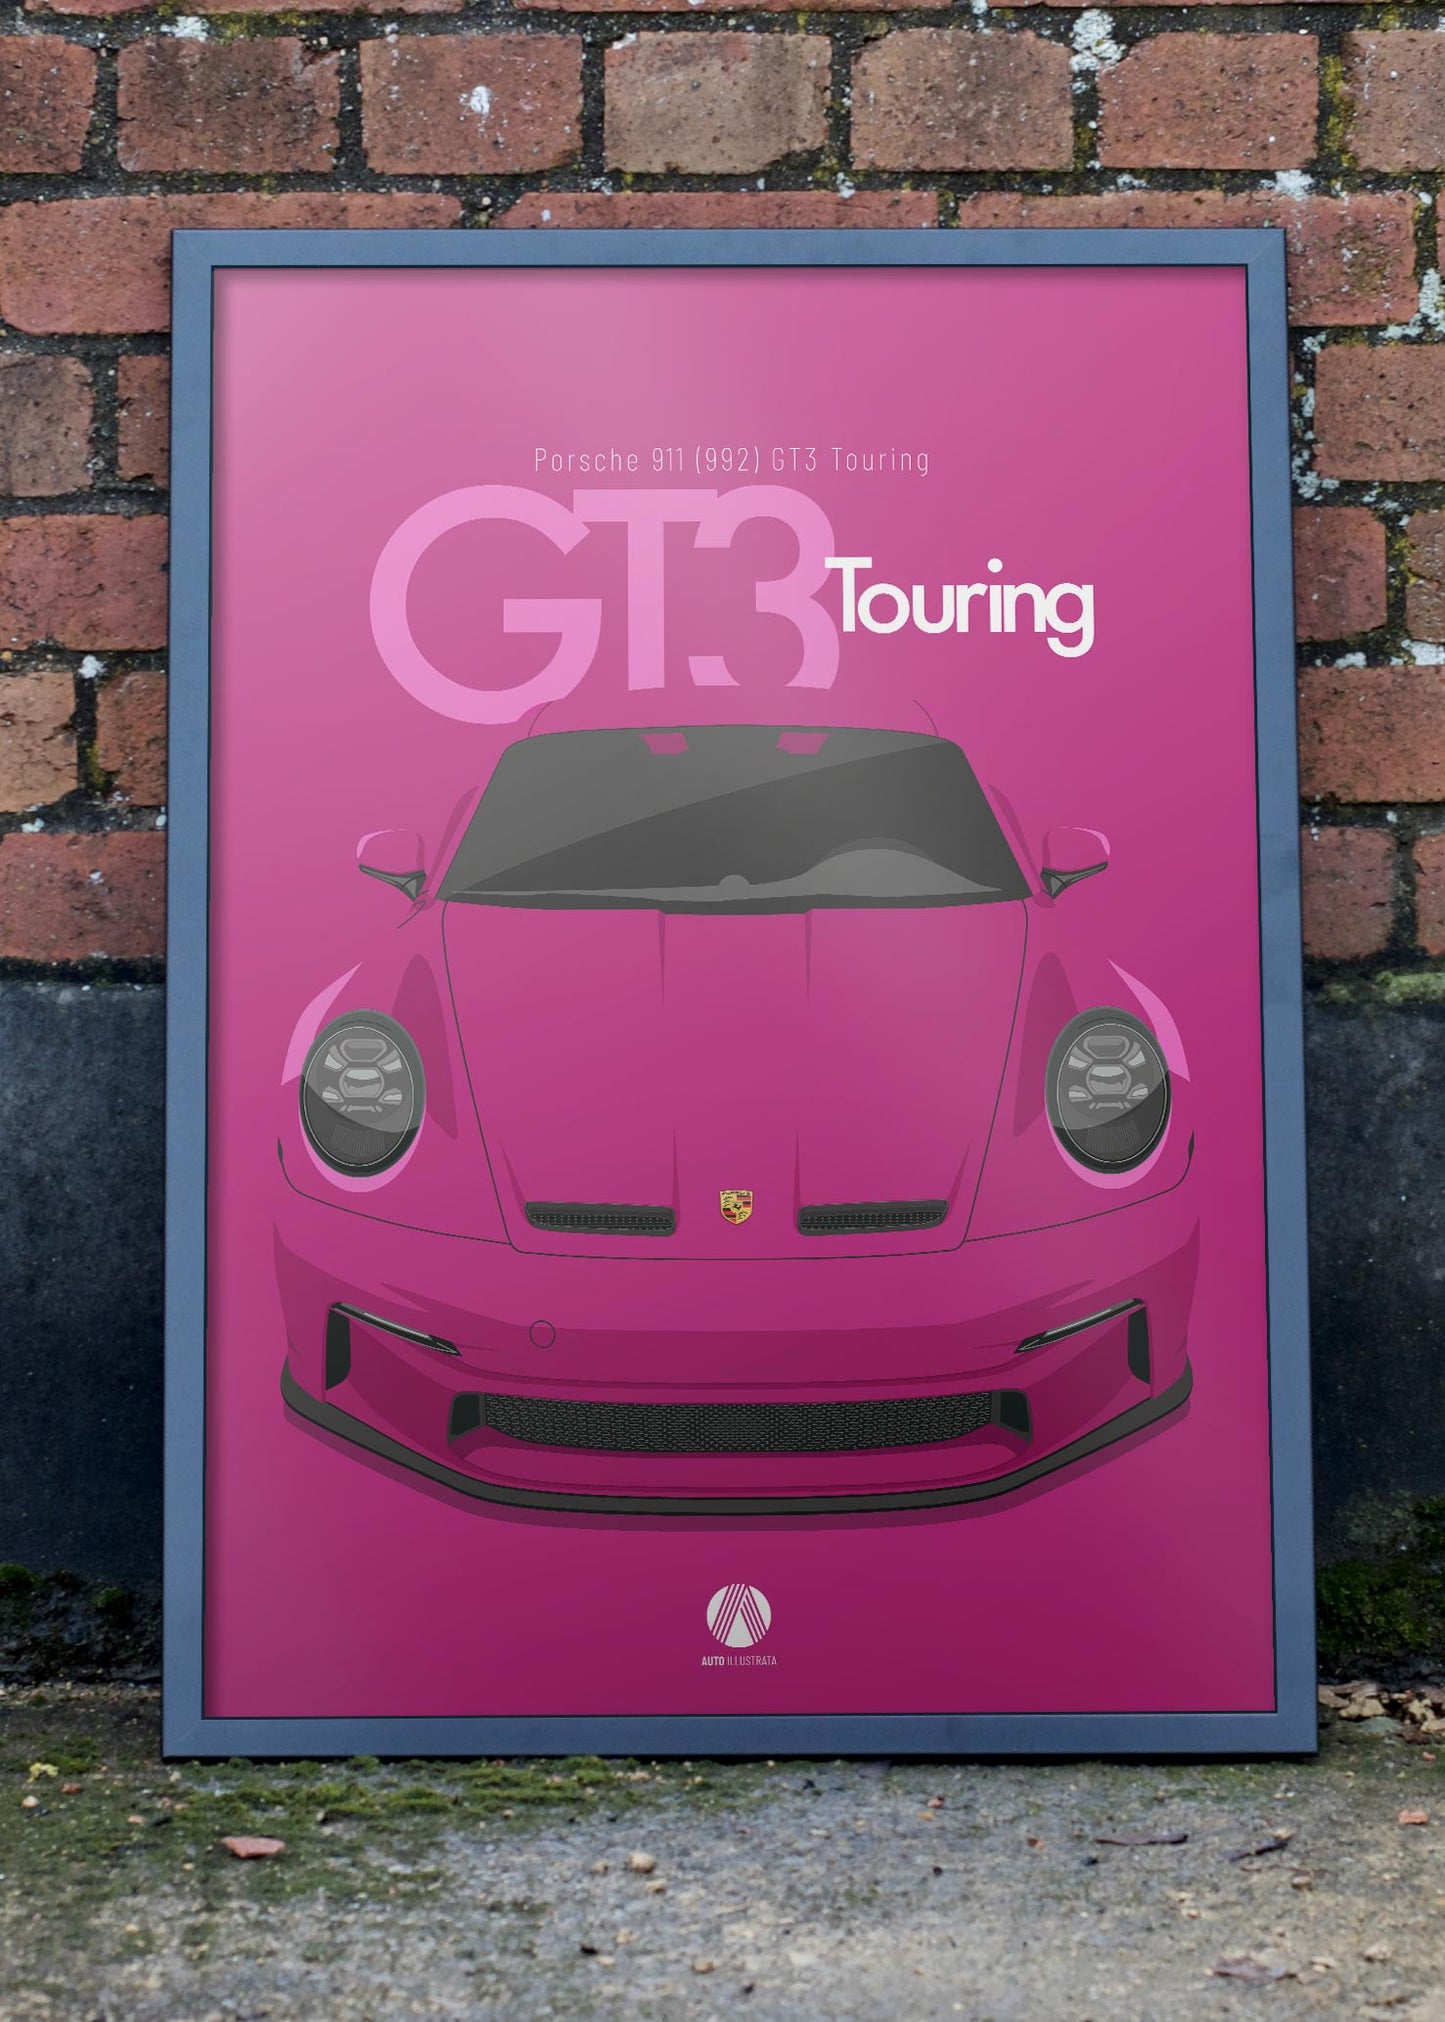 2020 Porsche 911 (992) GT3 Touring - Rubystar - poster print